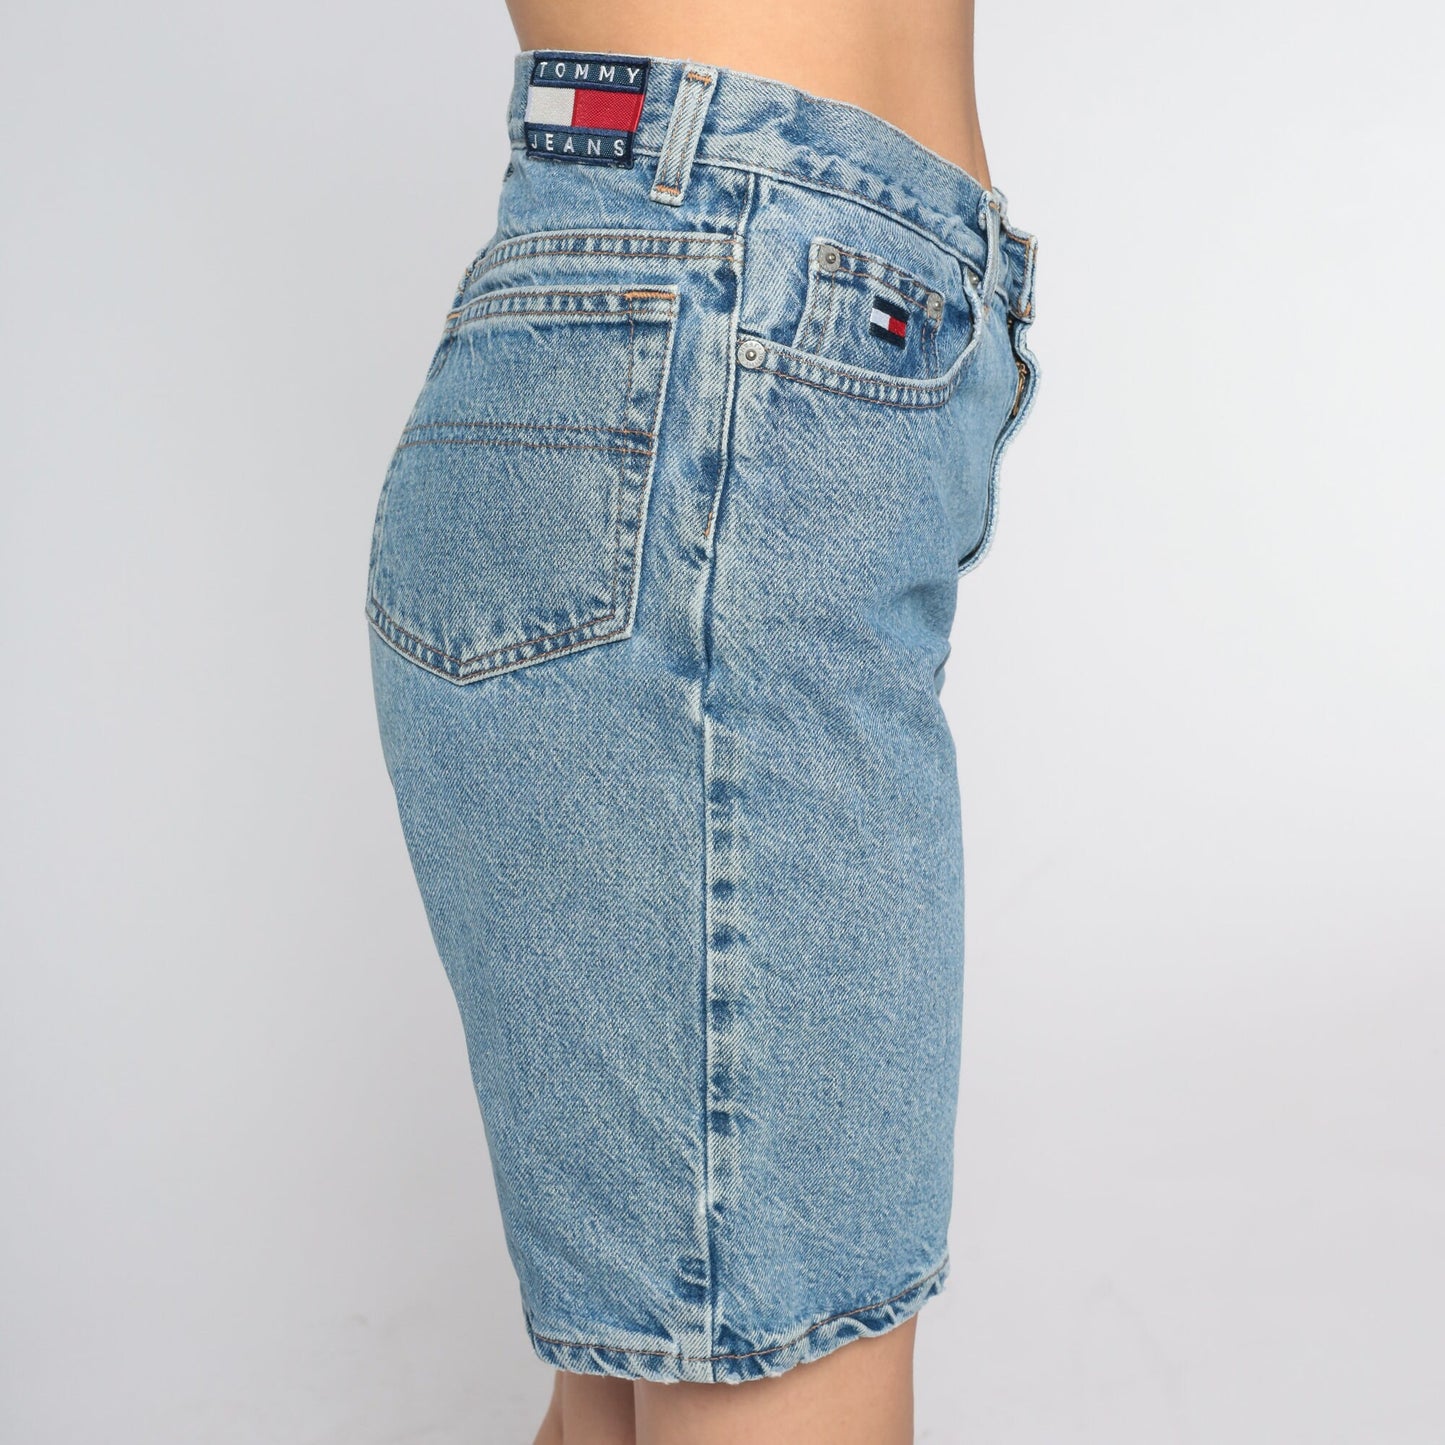 Tommy Hilfiger Jean Shorts 90s Bermuda Denim Shorts Retro Mom Shorts Blue High Waisted Knee Length Streetwear 1990s Vintage Small S 28